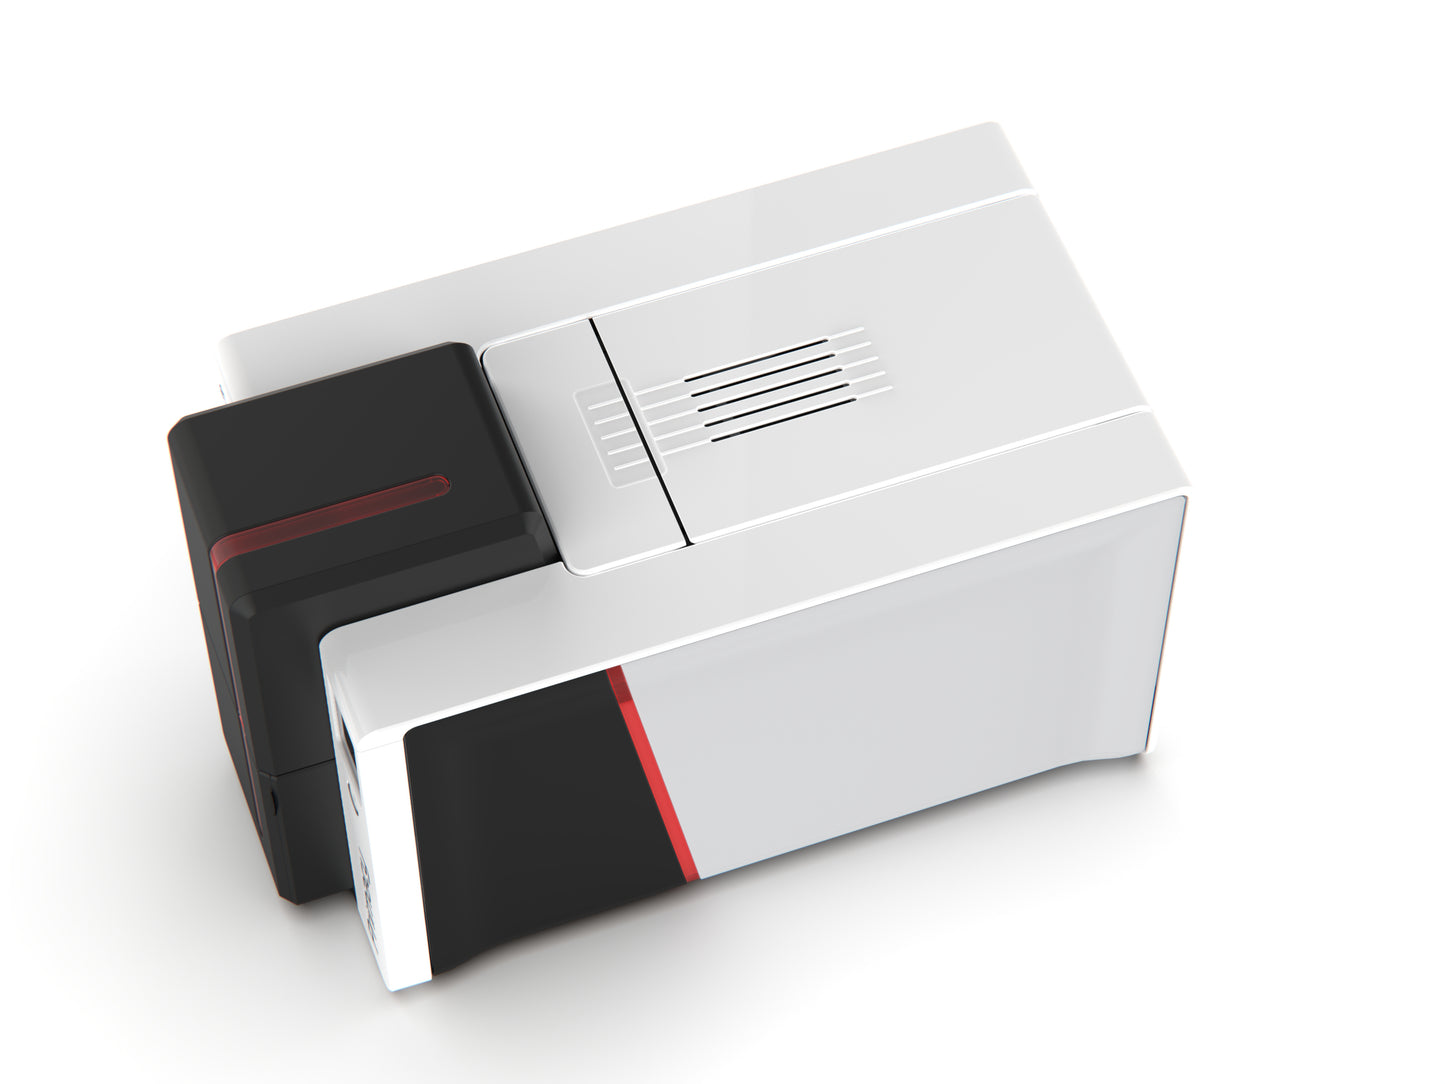 Evolis Primacy 2 Card Printer - Dual-Sided